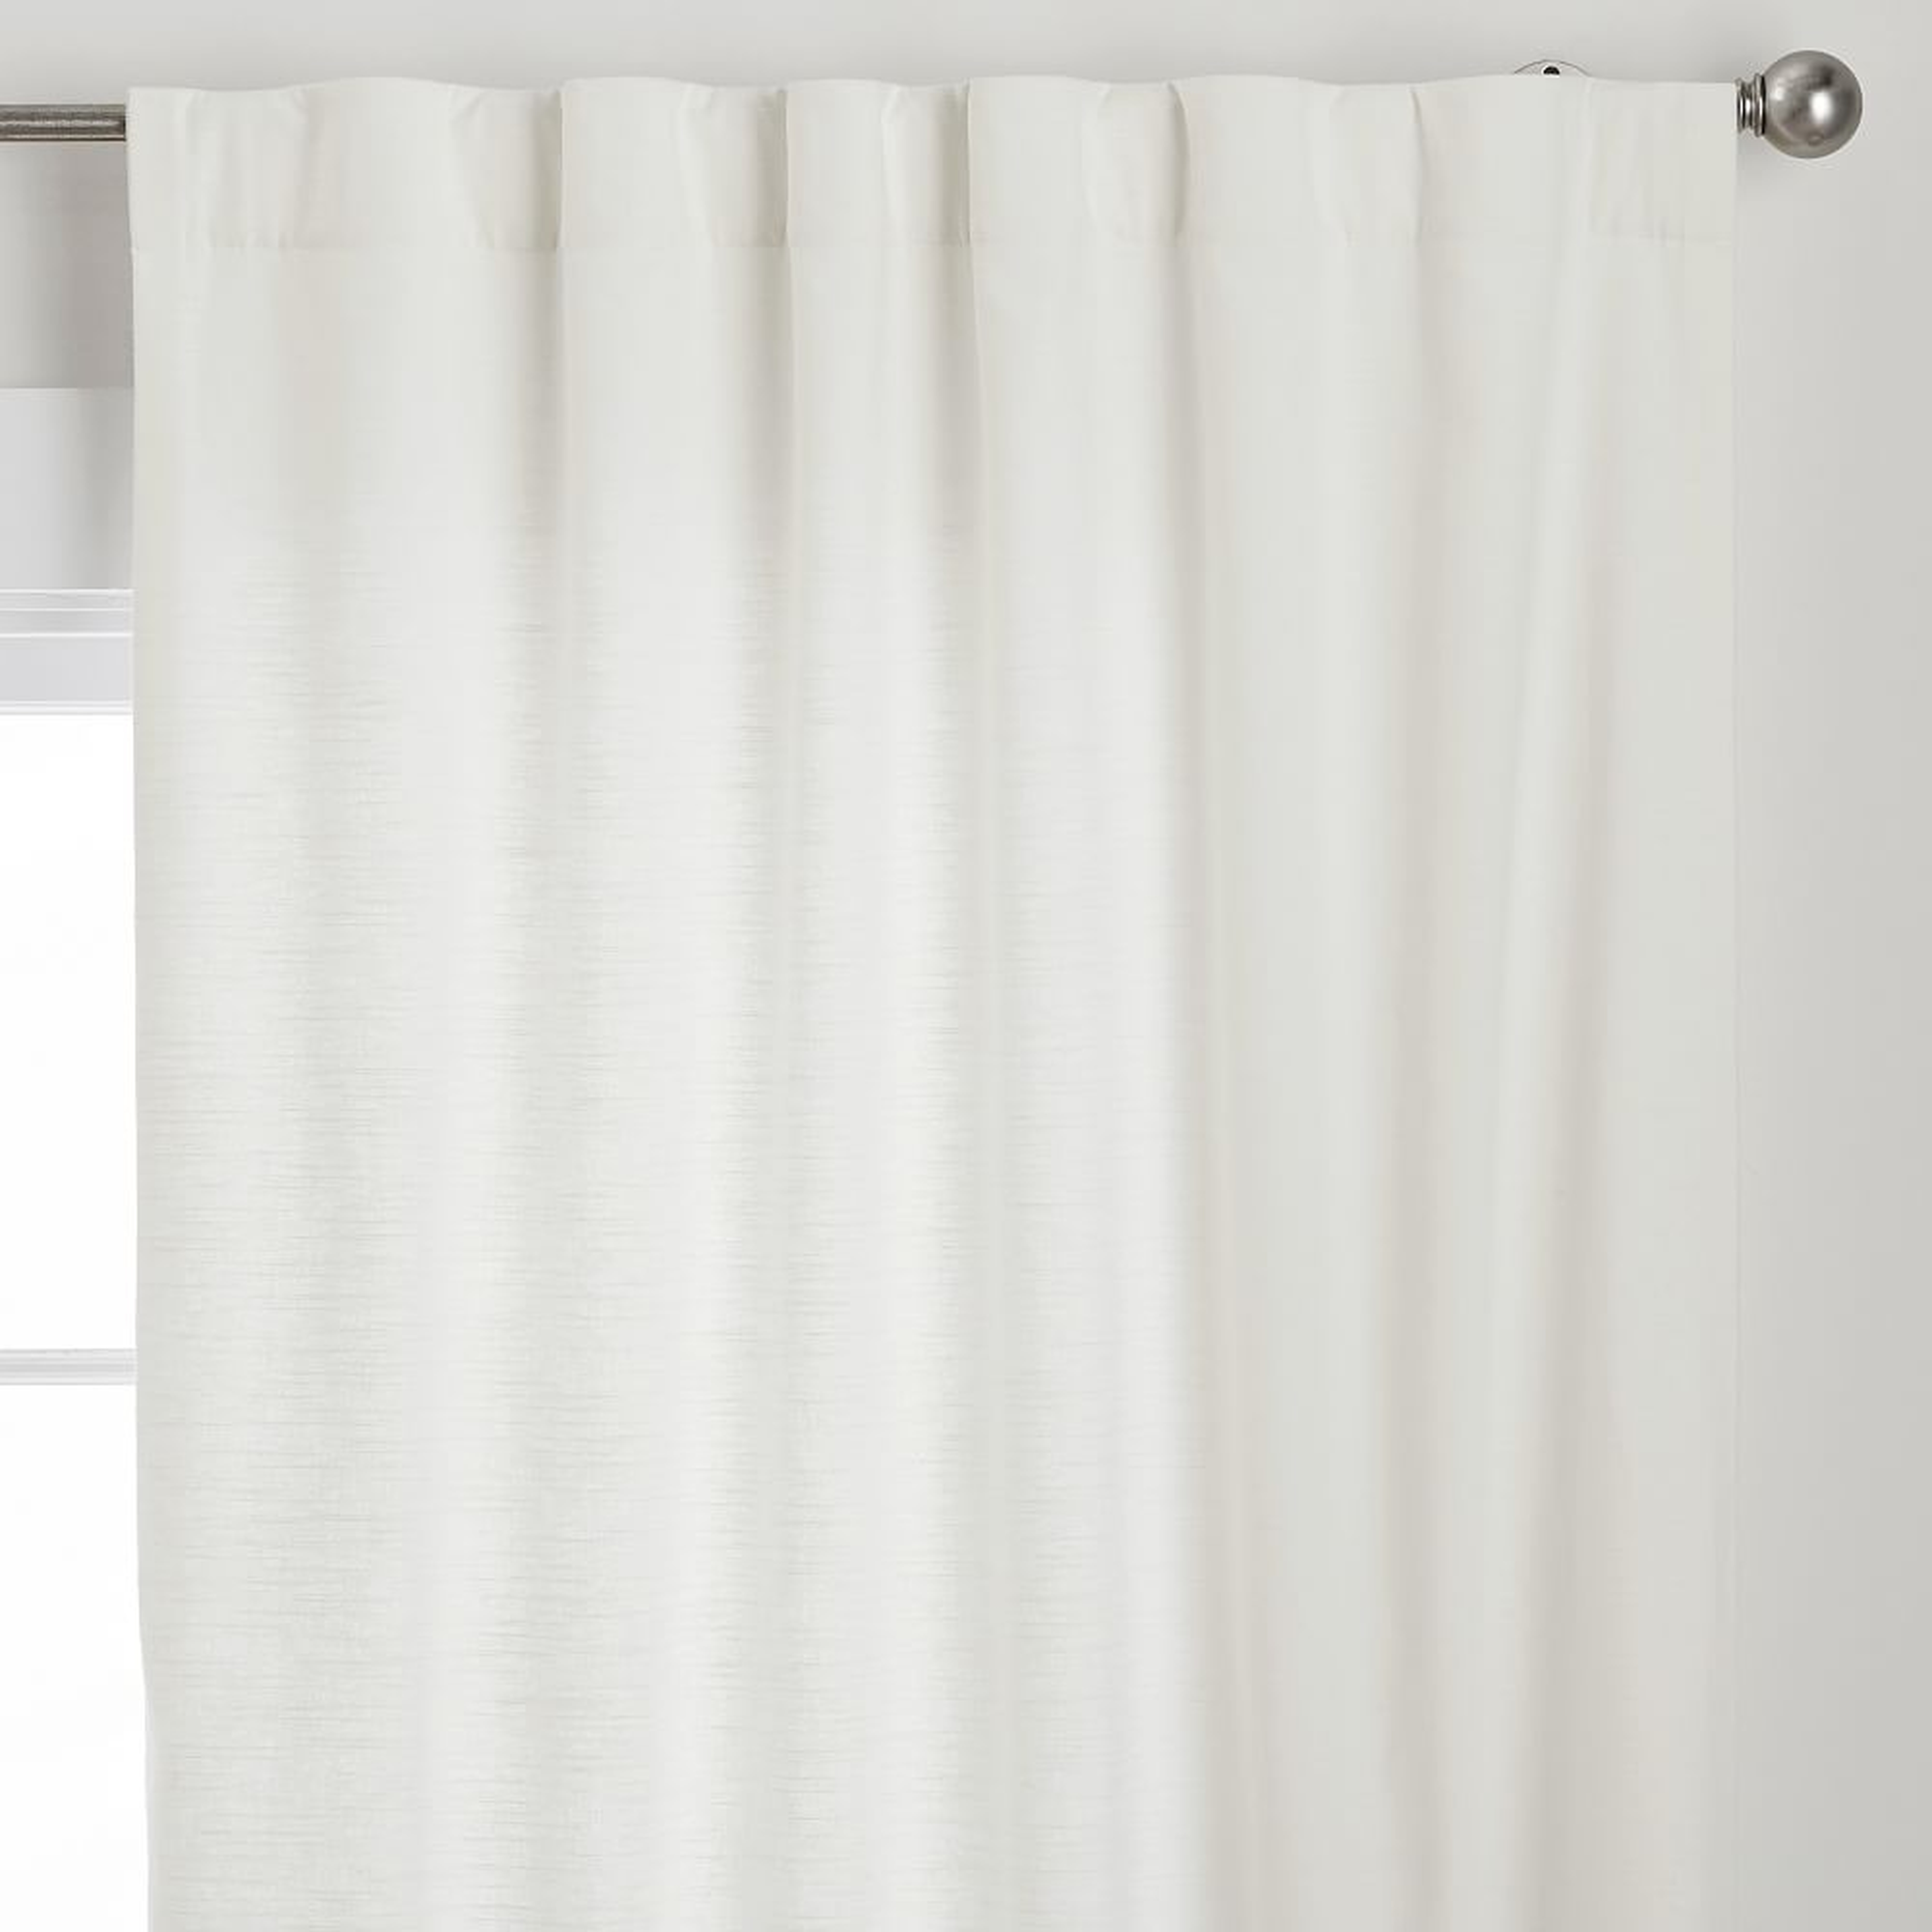 Cotton Linen Semi-Sheer Curtain Set of 2, White, 44" x 96" - Pottery Barn Teen